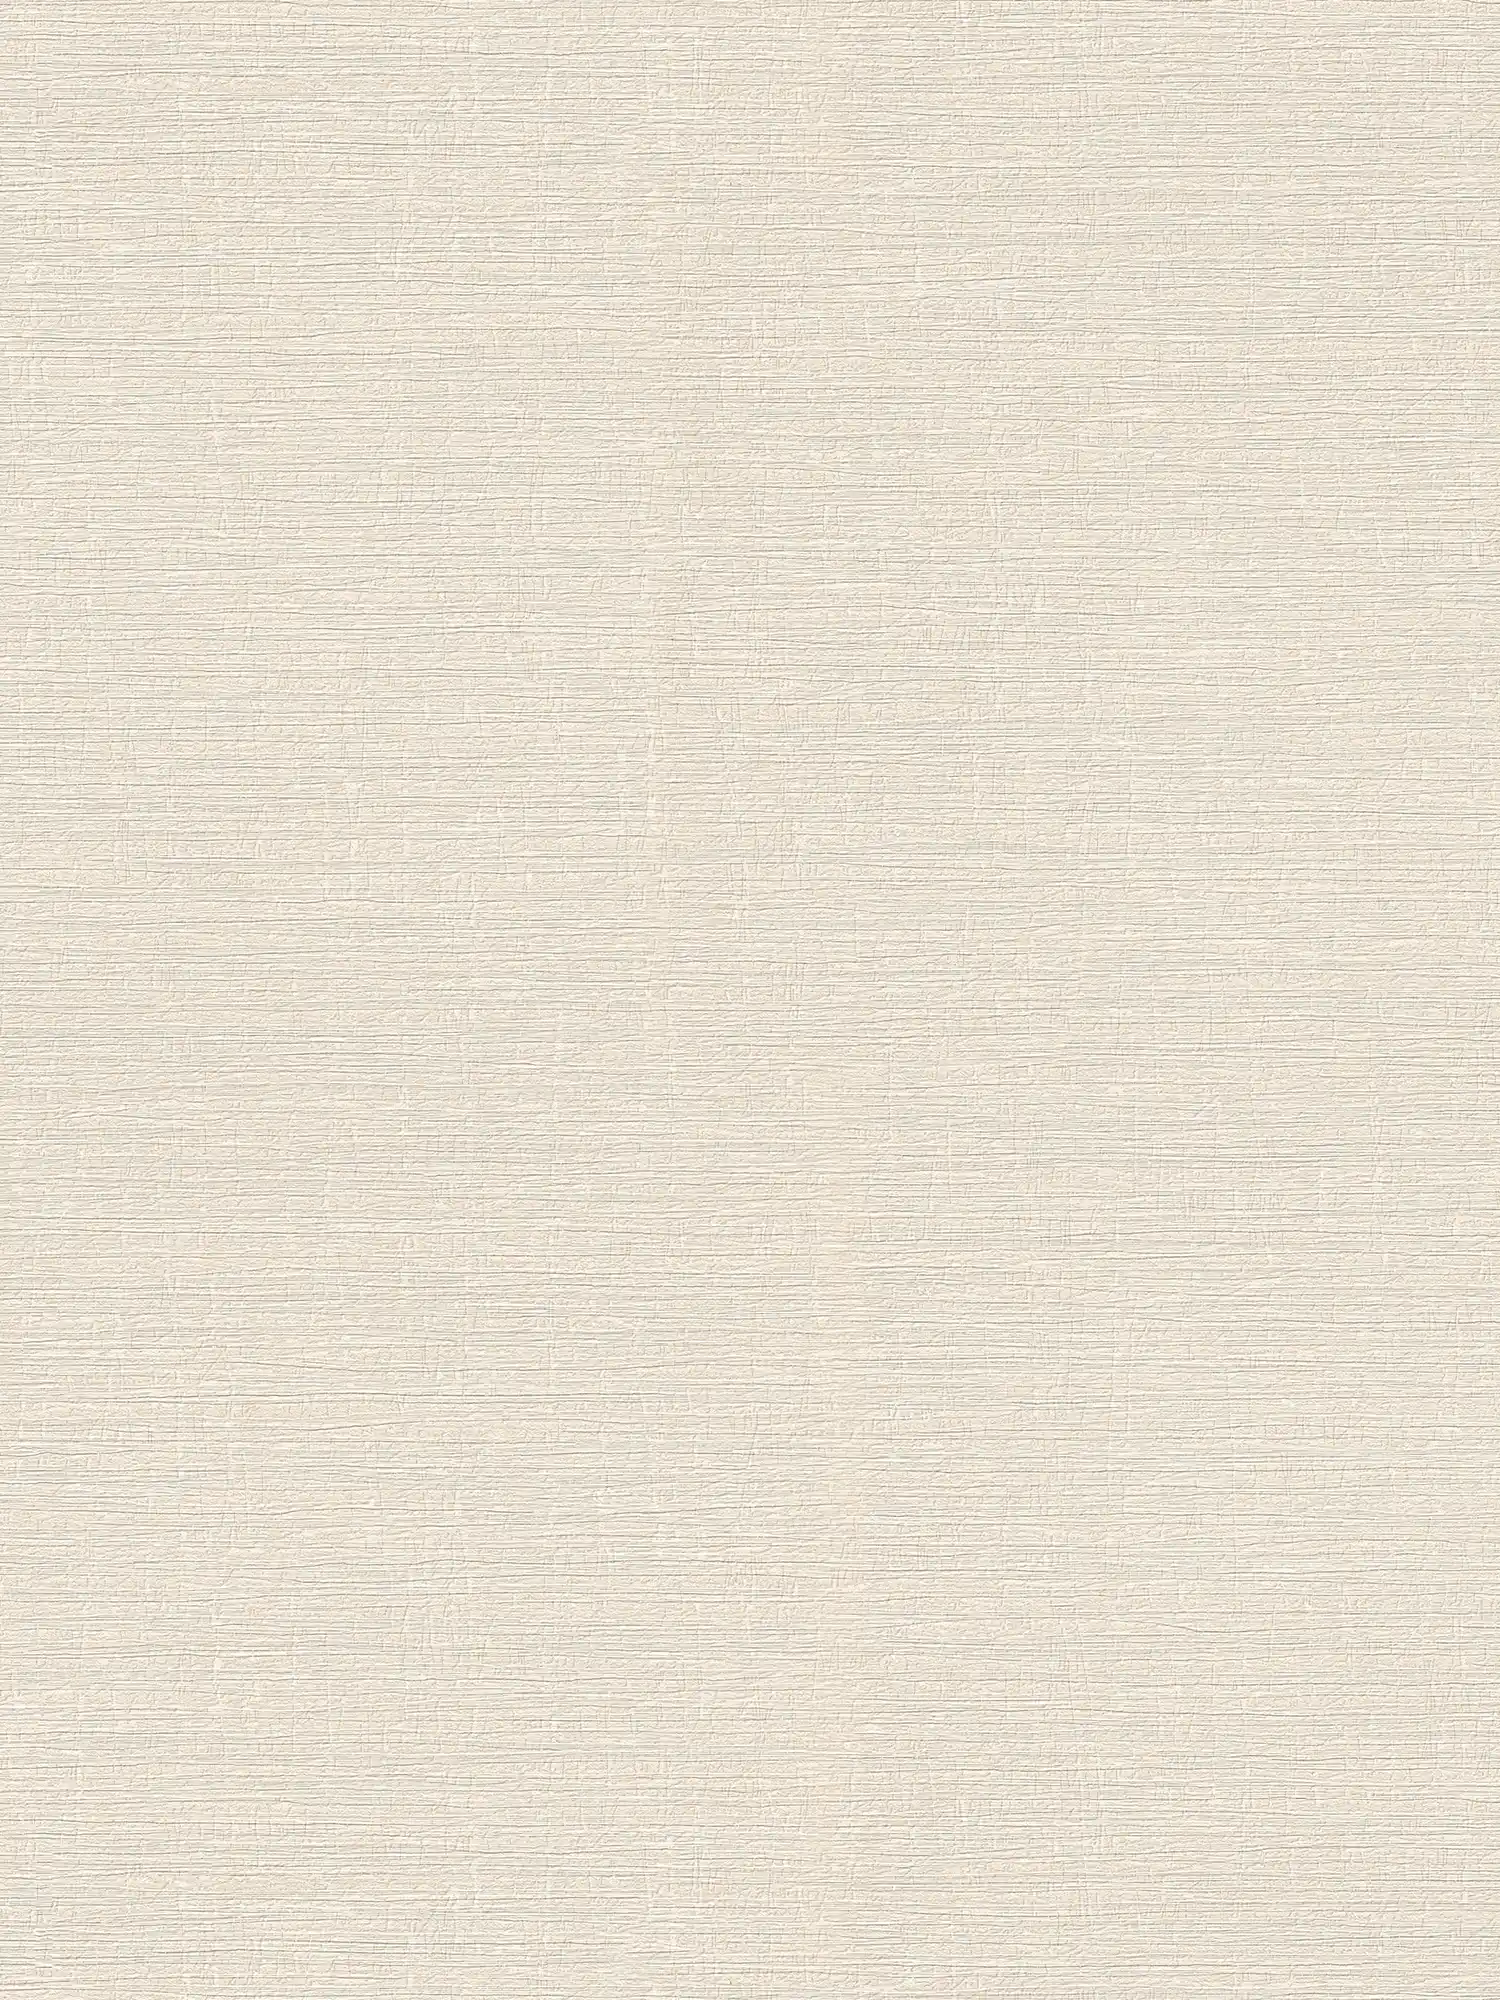 Lightly textured plain wallpaper in textile look - beige, cream
